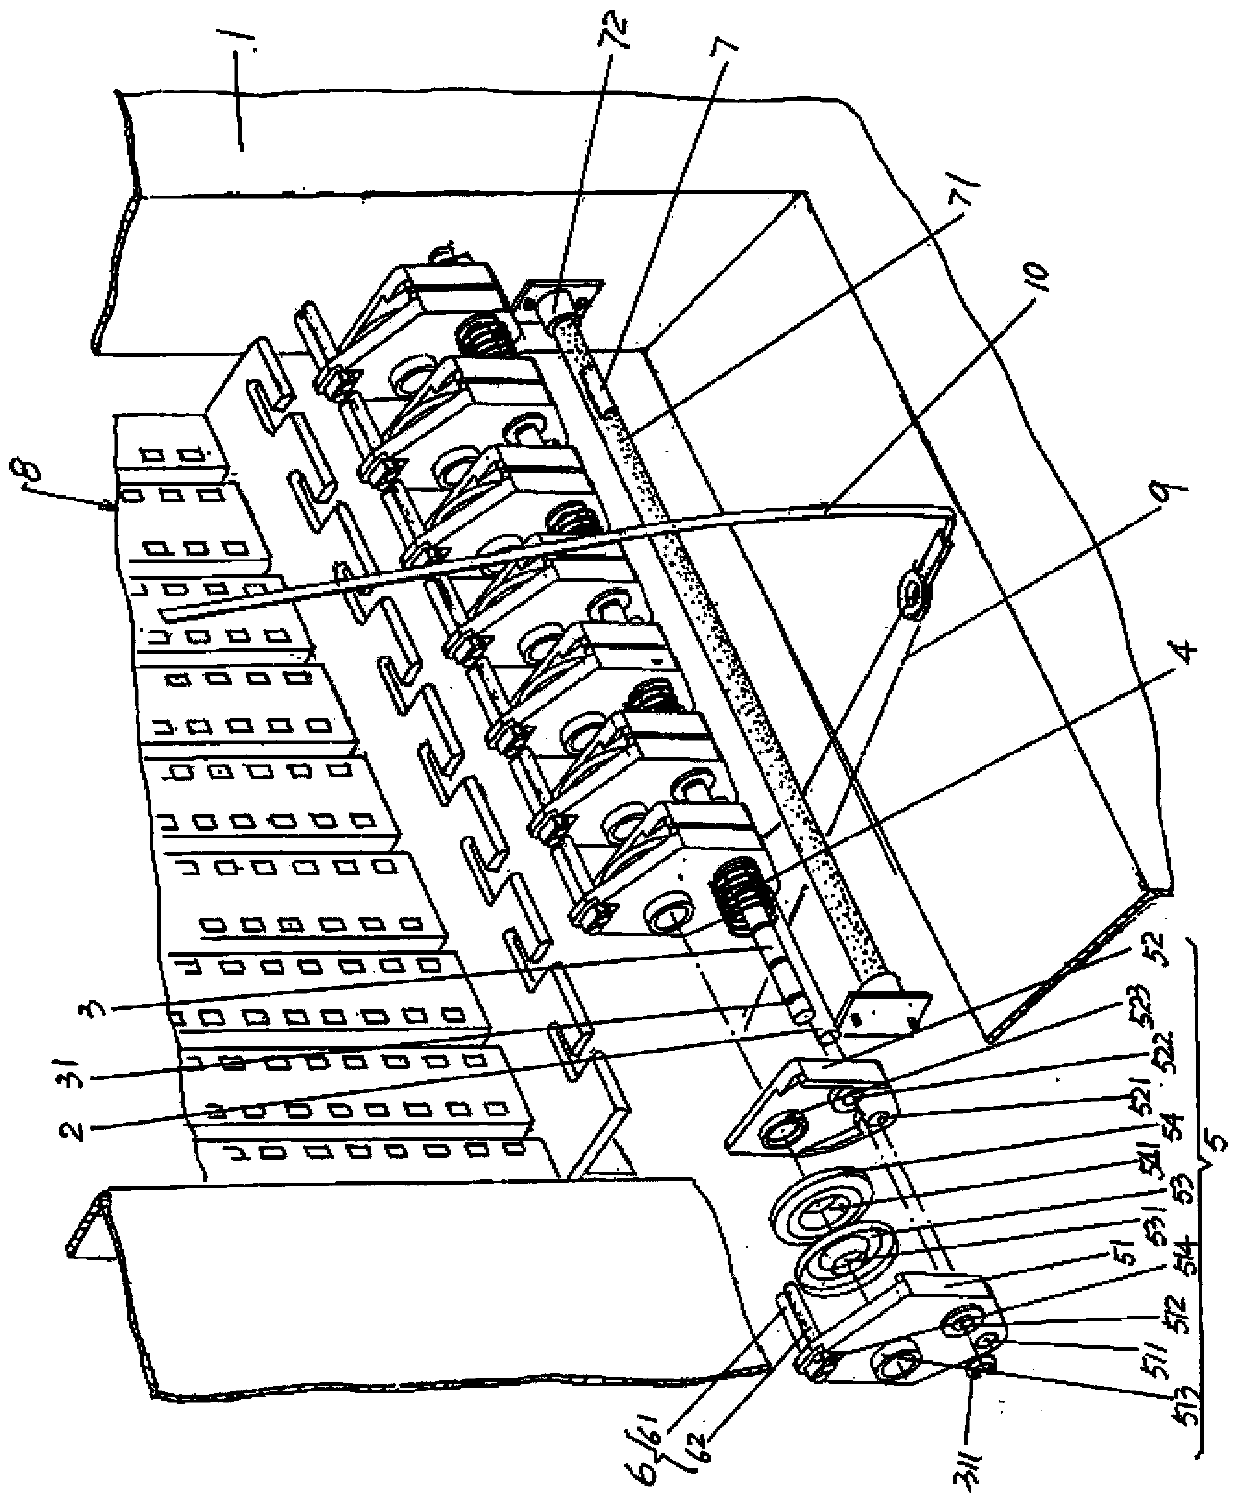 Directional yarn guide mechanism of computer flat knitting machine